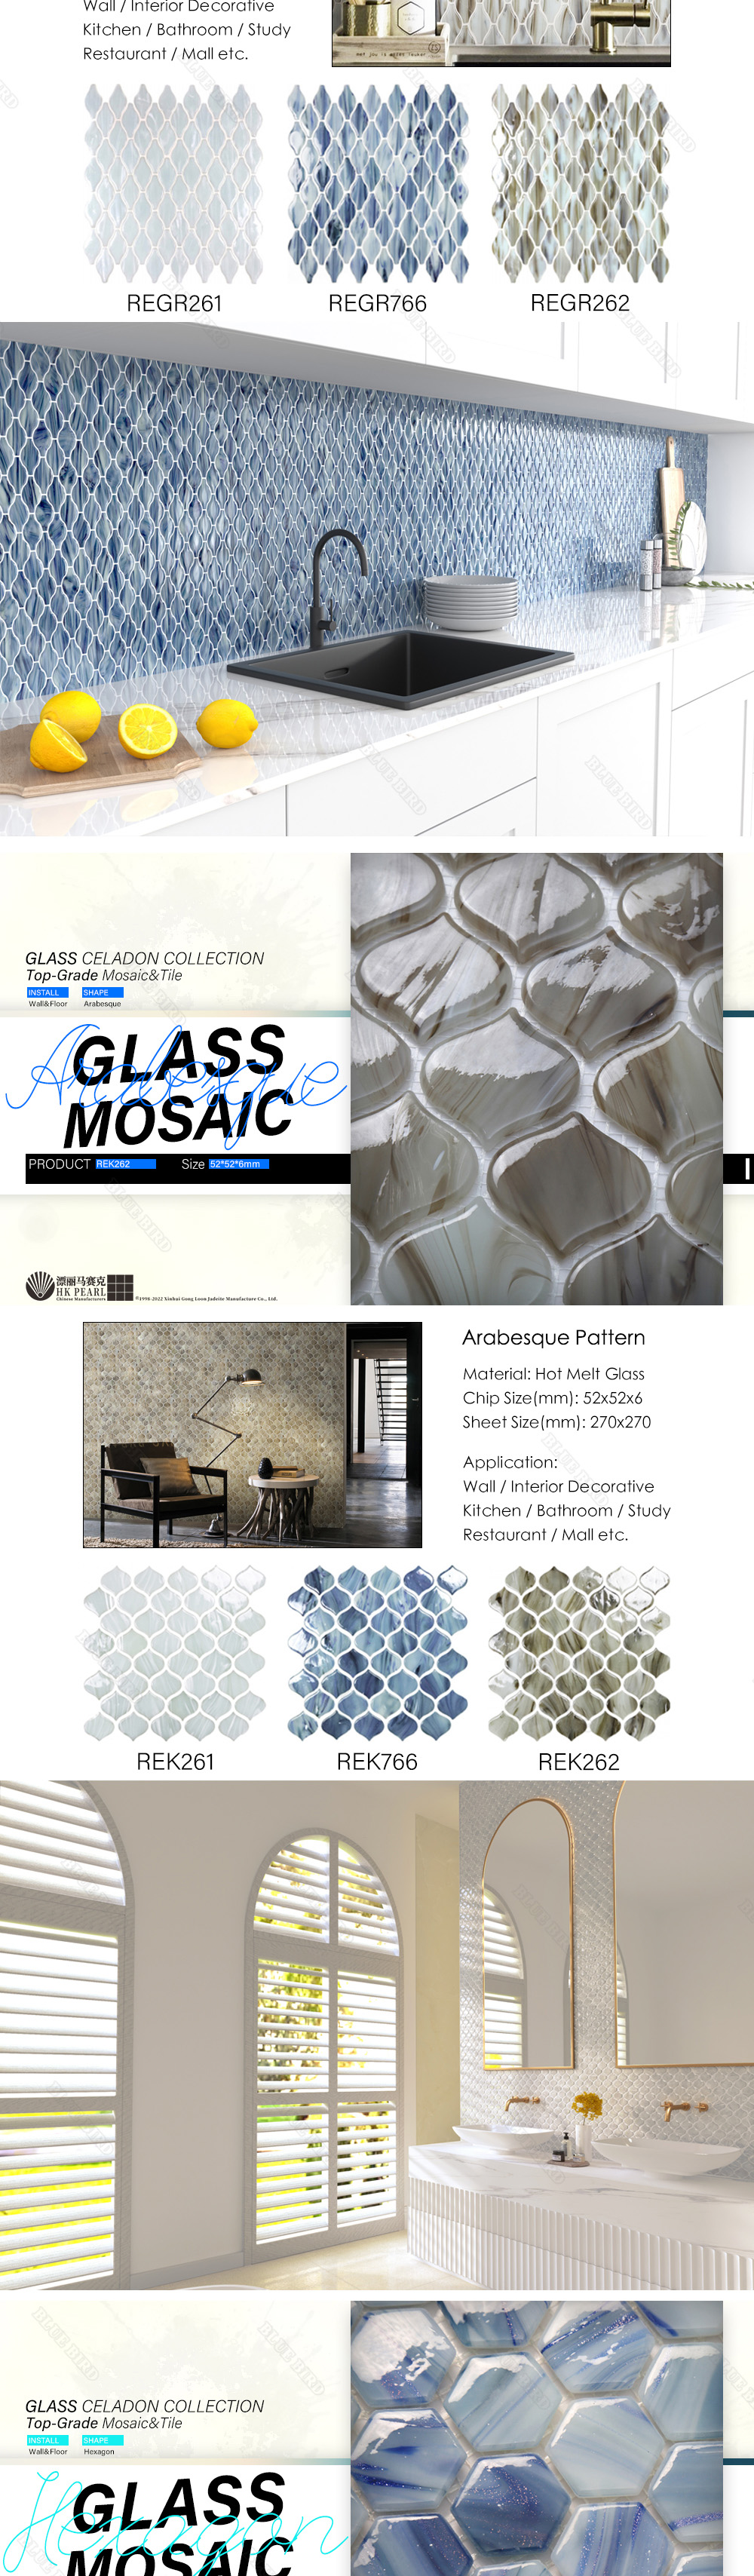 Celadon Collection Glass Mosaic Art